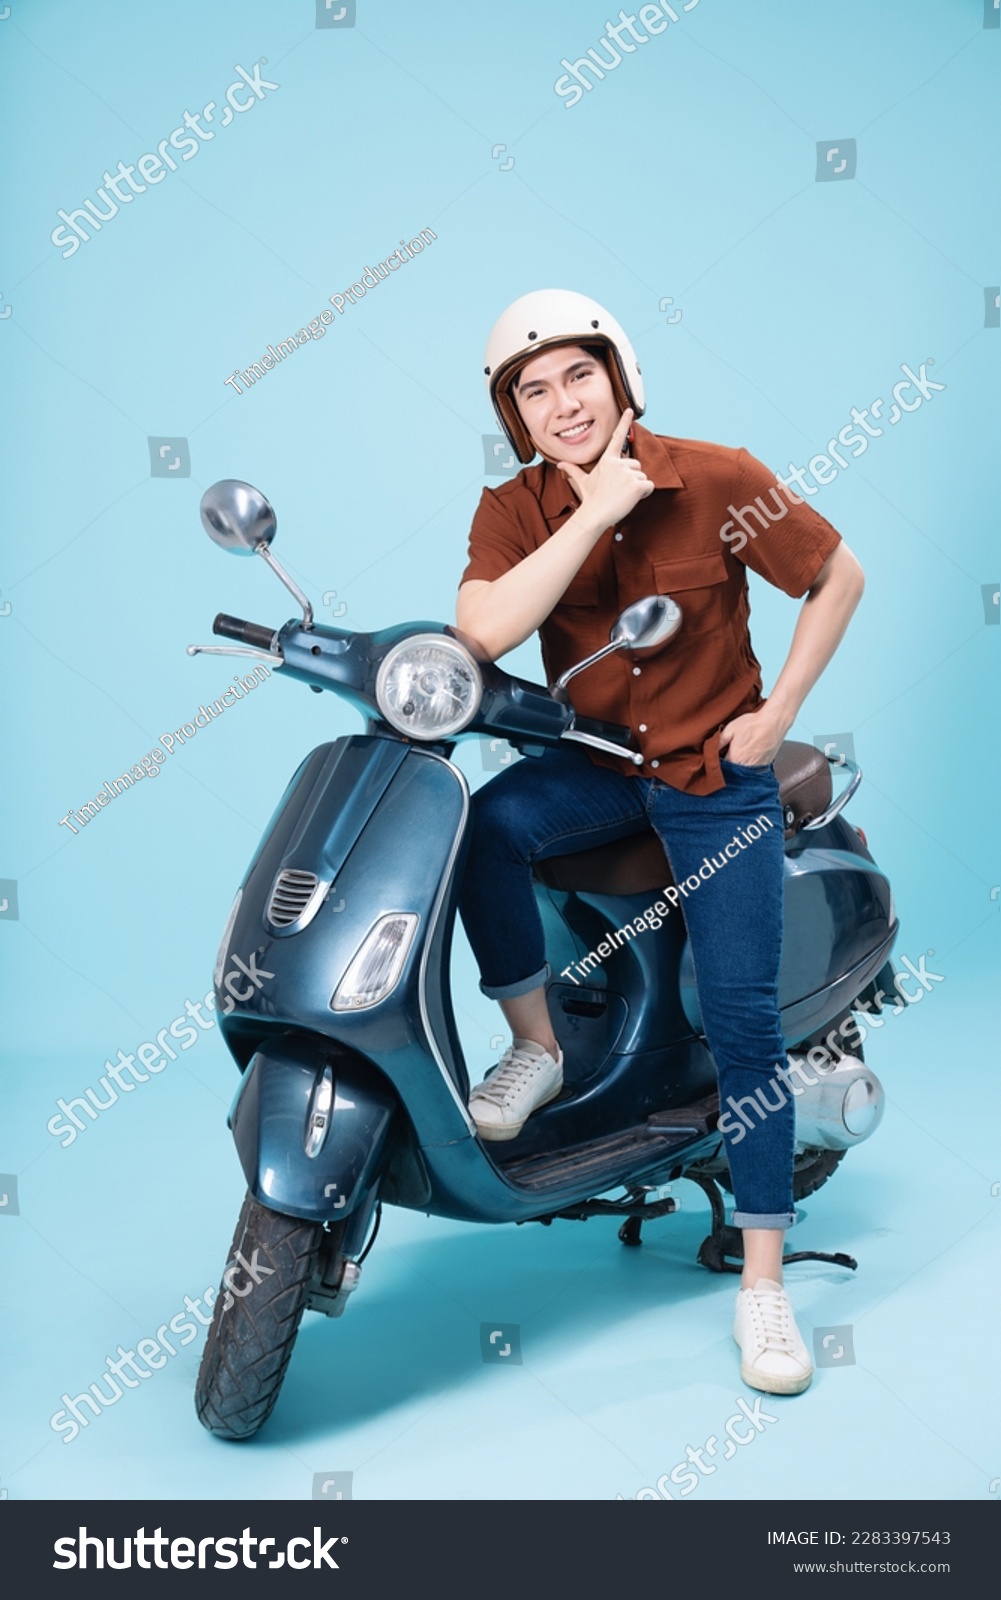 Image of yougn Asian man on motorbike #2283397543